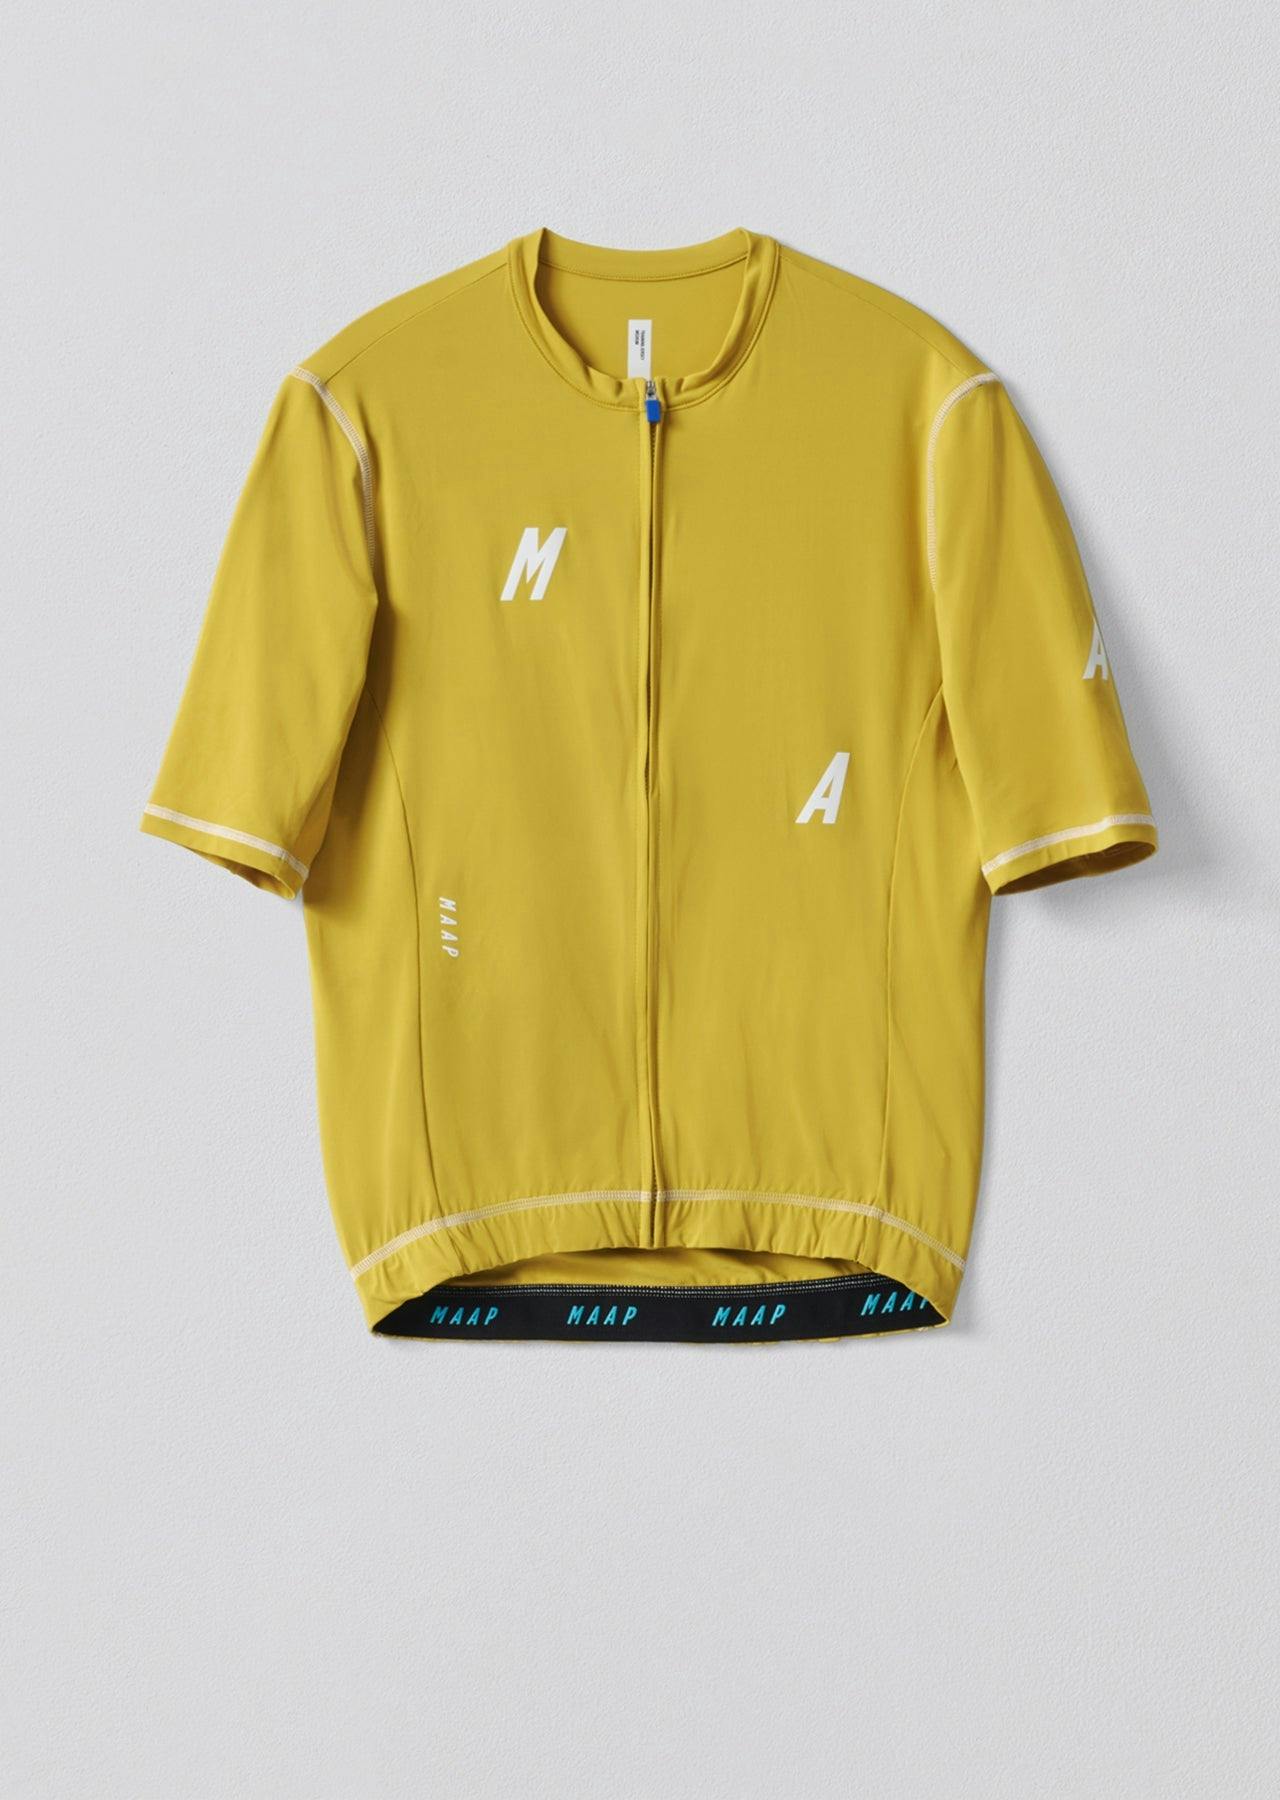 Men’s Cycling Clothing | MAAP